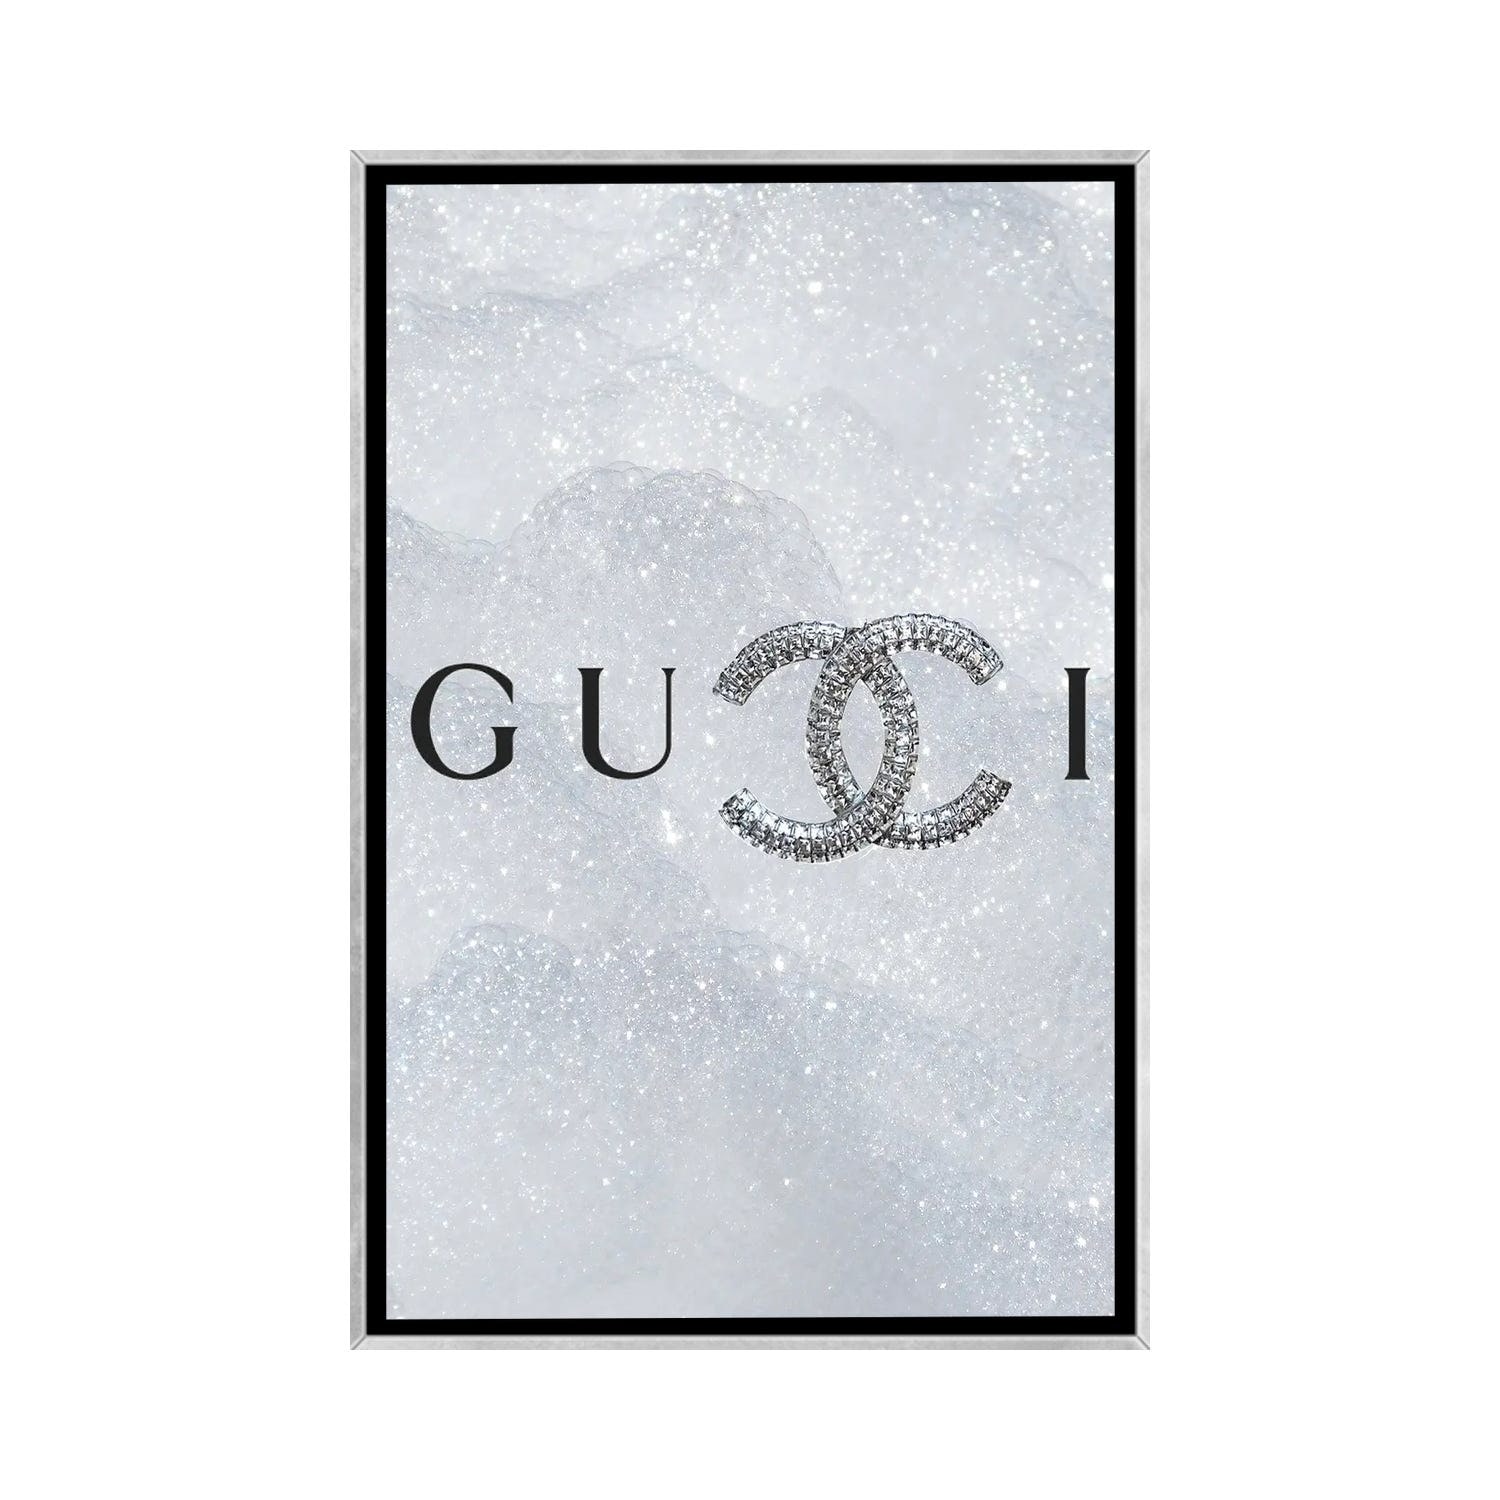 Framed Canvas Art - Louis Vuitton Logo Pop Art by Julie Schreiber ( Fashion > Fashion Brands > Louis Vuitton art) - 26x18 in